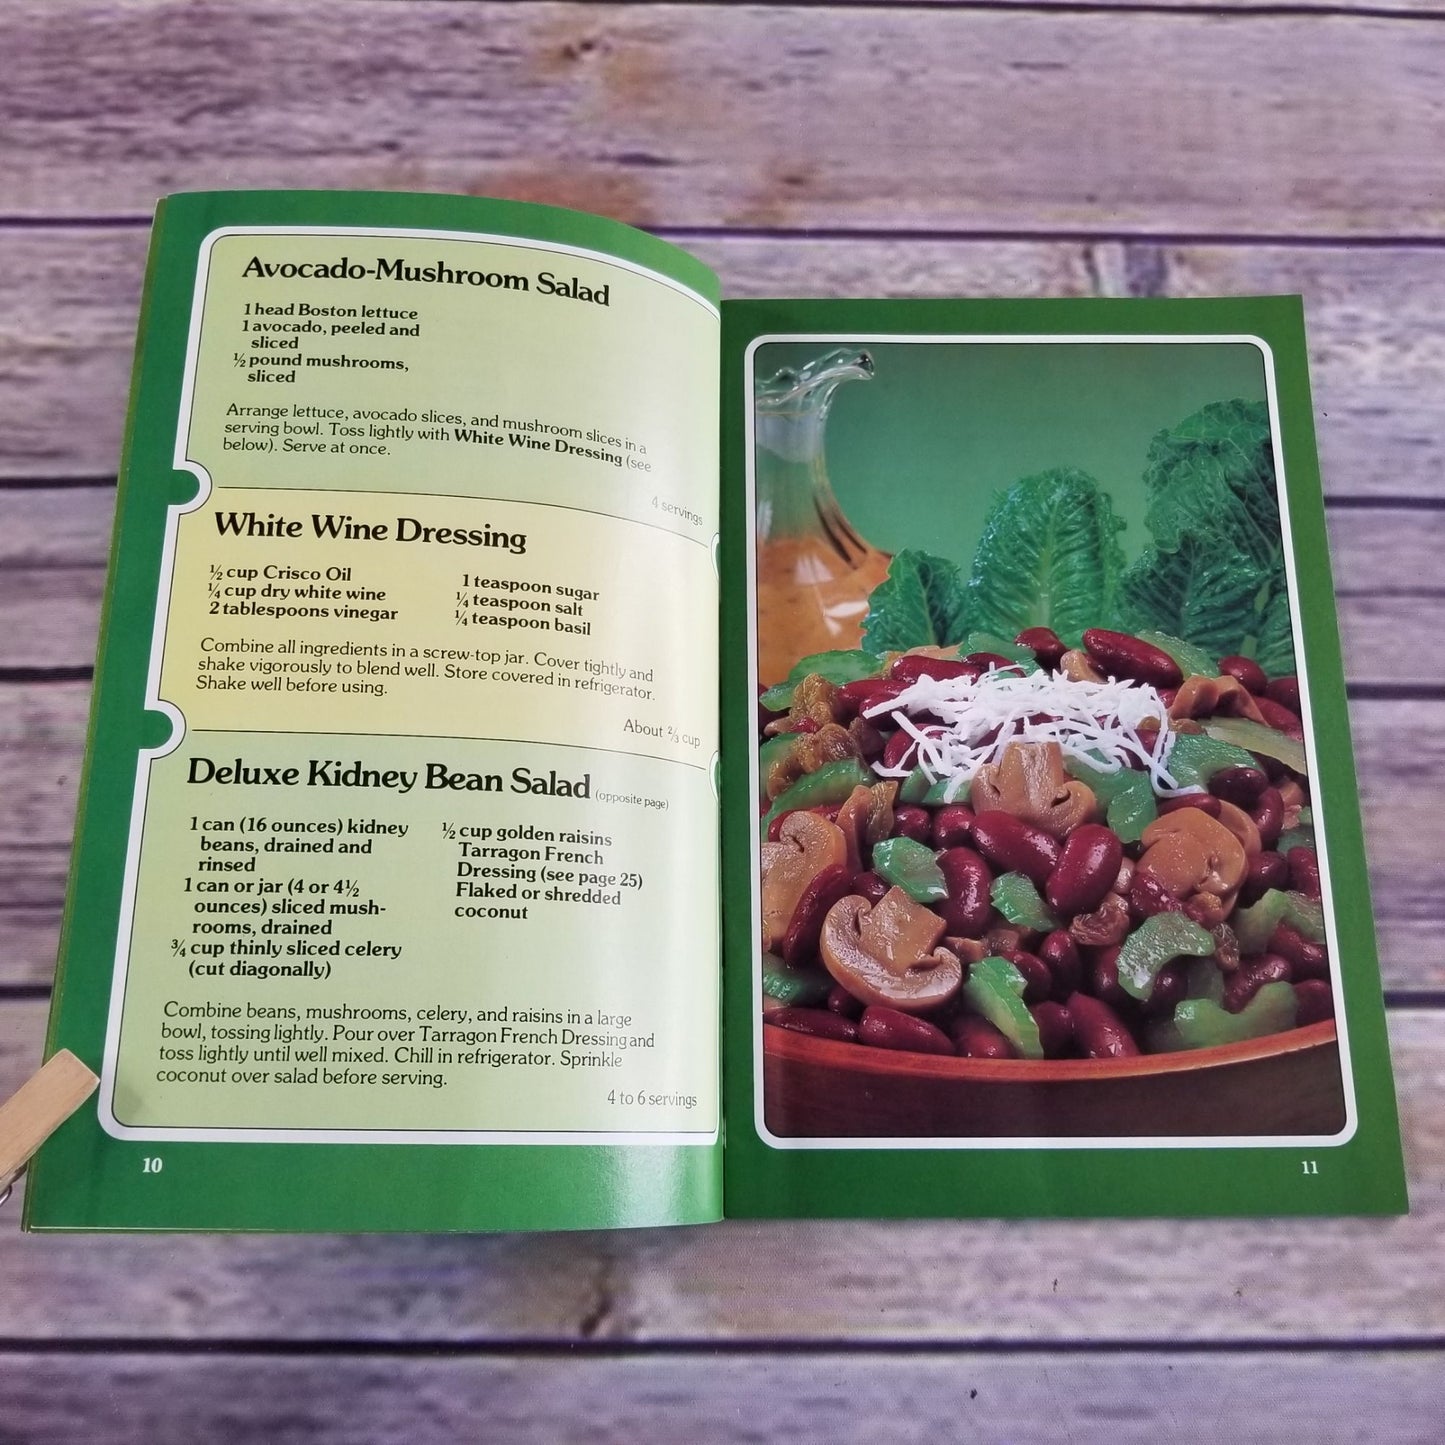 Vintage Cookbook Crisco Oil Salad Lovers Cook Book 1979 Culinary Arts Dressings Paperback Booklet Promo